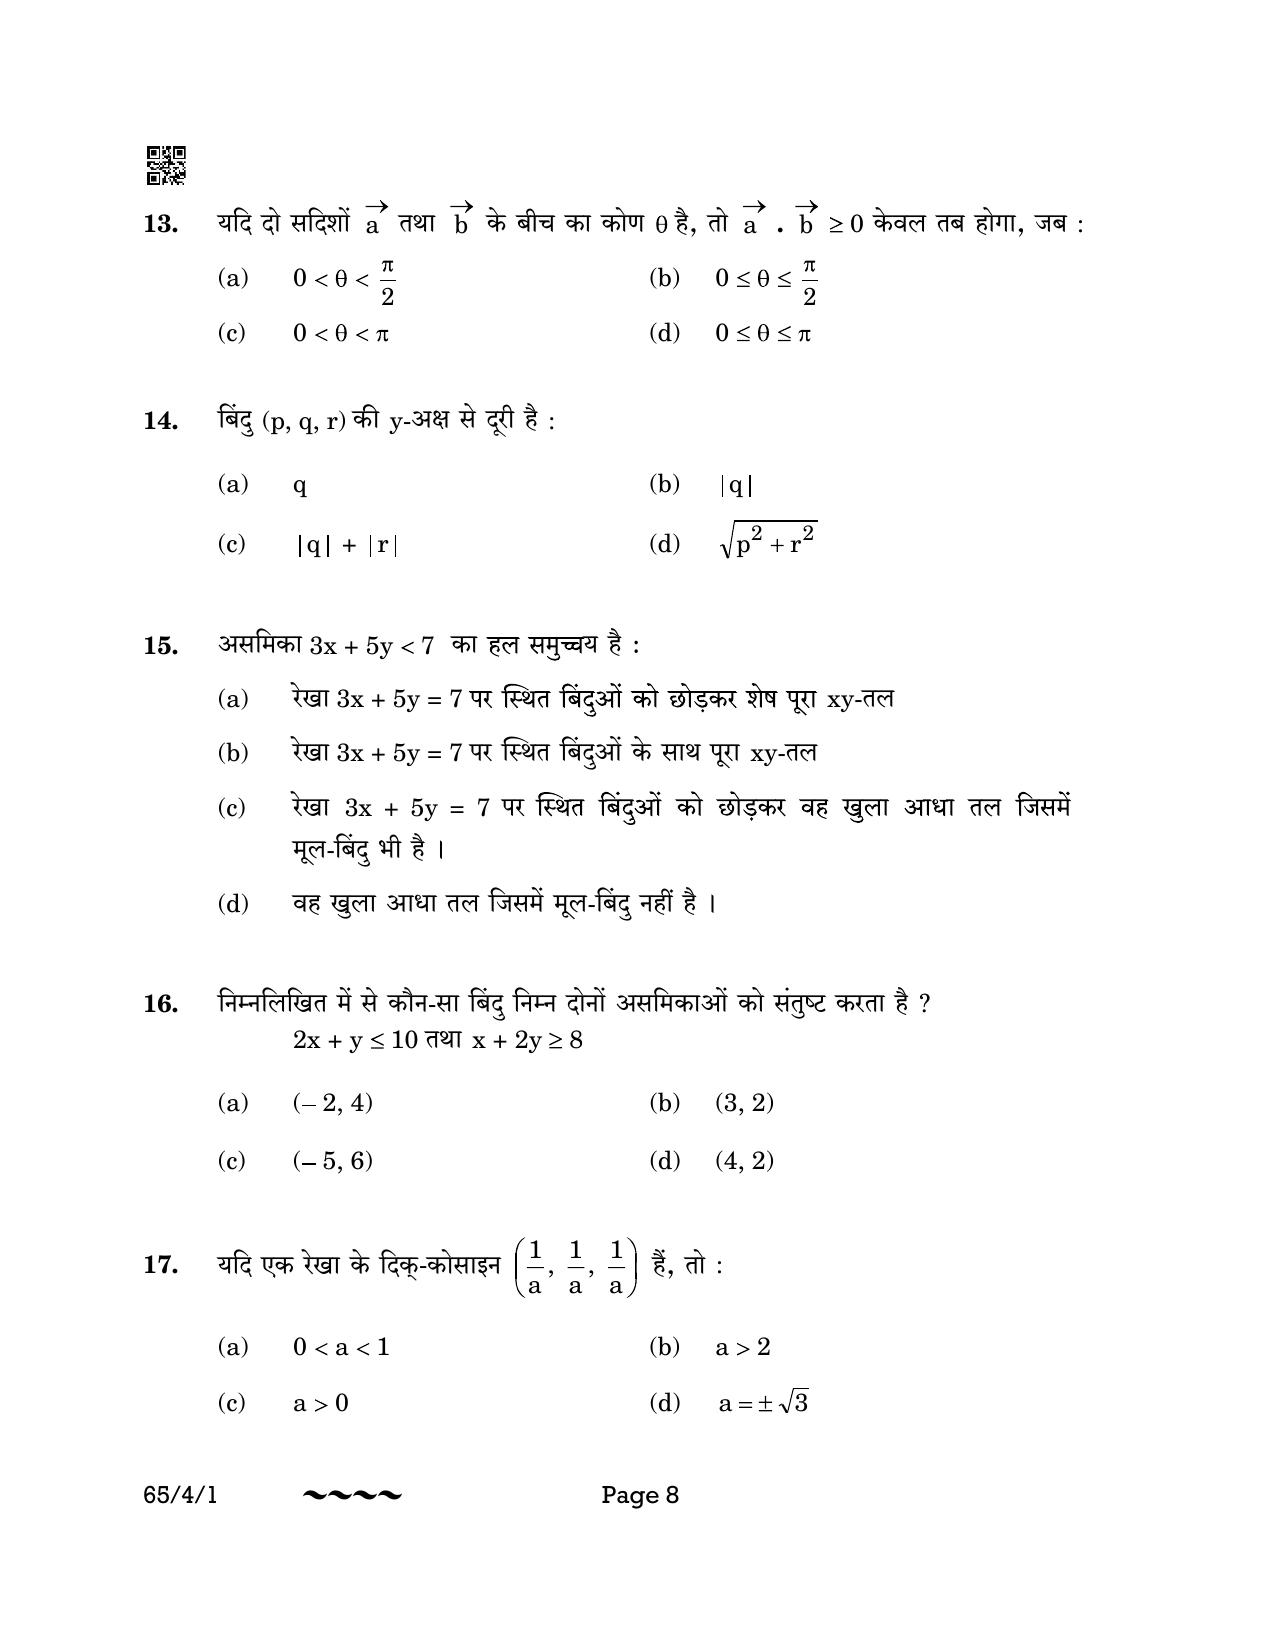 CBSE Class 12 65-4-1 MATHEMATICS 2023 Question Paper - Page 8